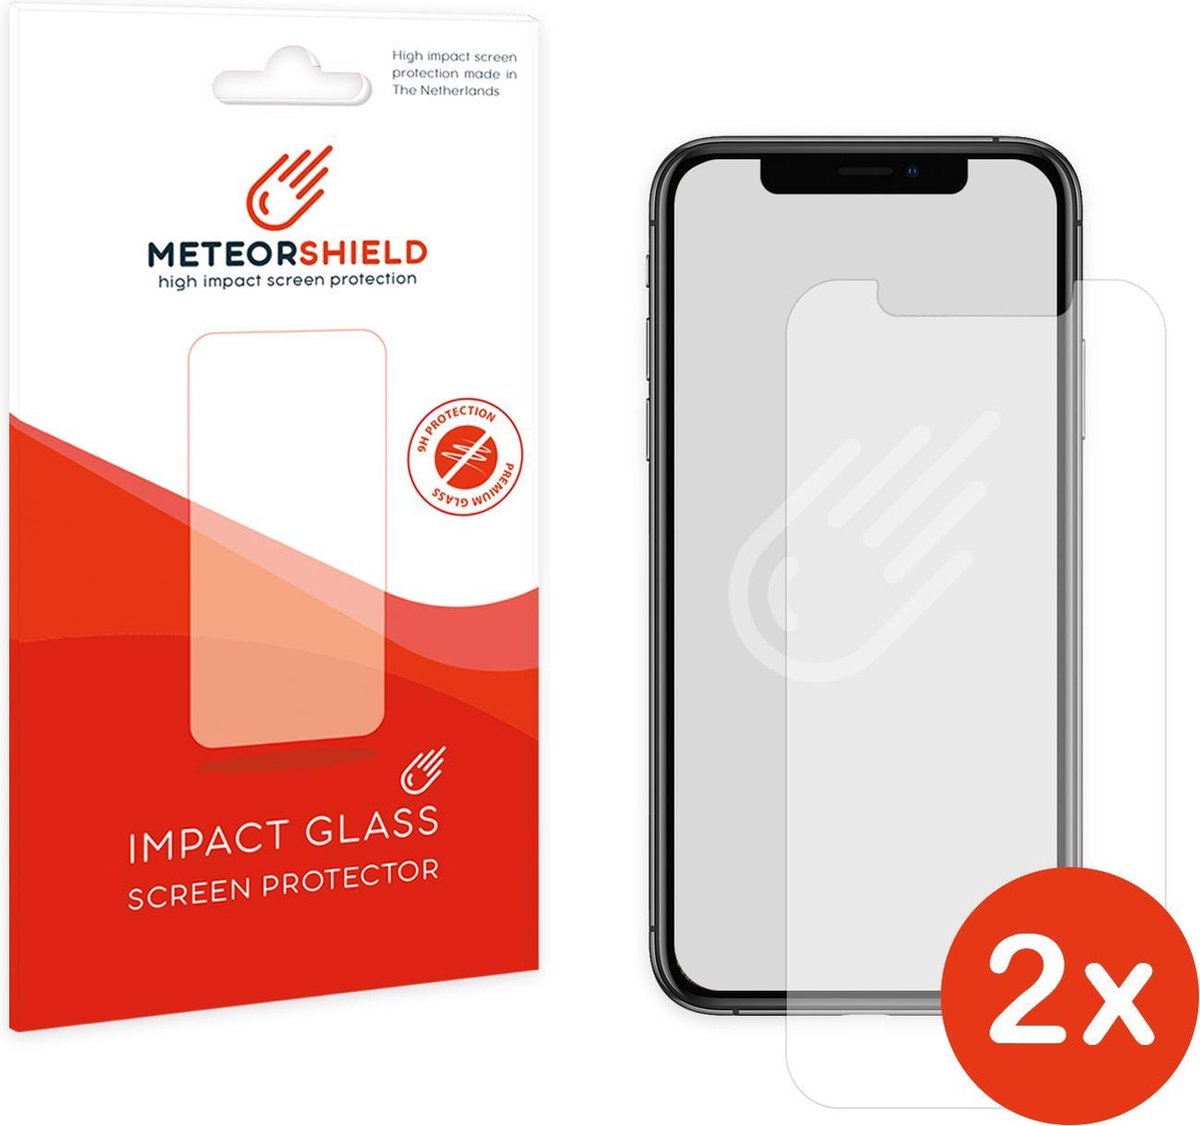 2 stuks: Meteorshield iPhone Xs screenprotector - Ultra clear impact glass